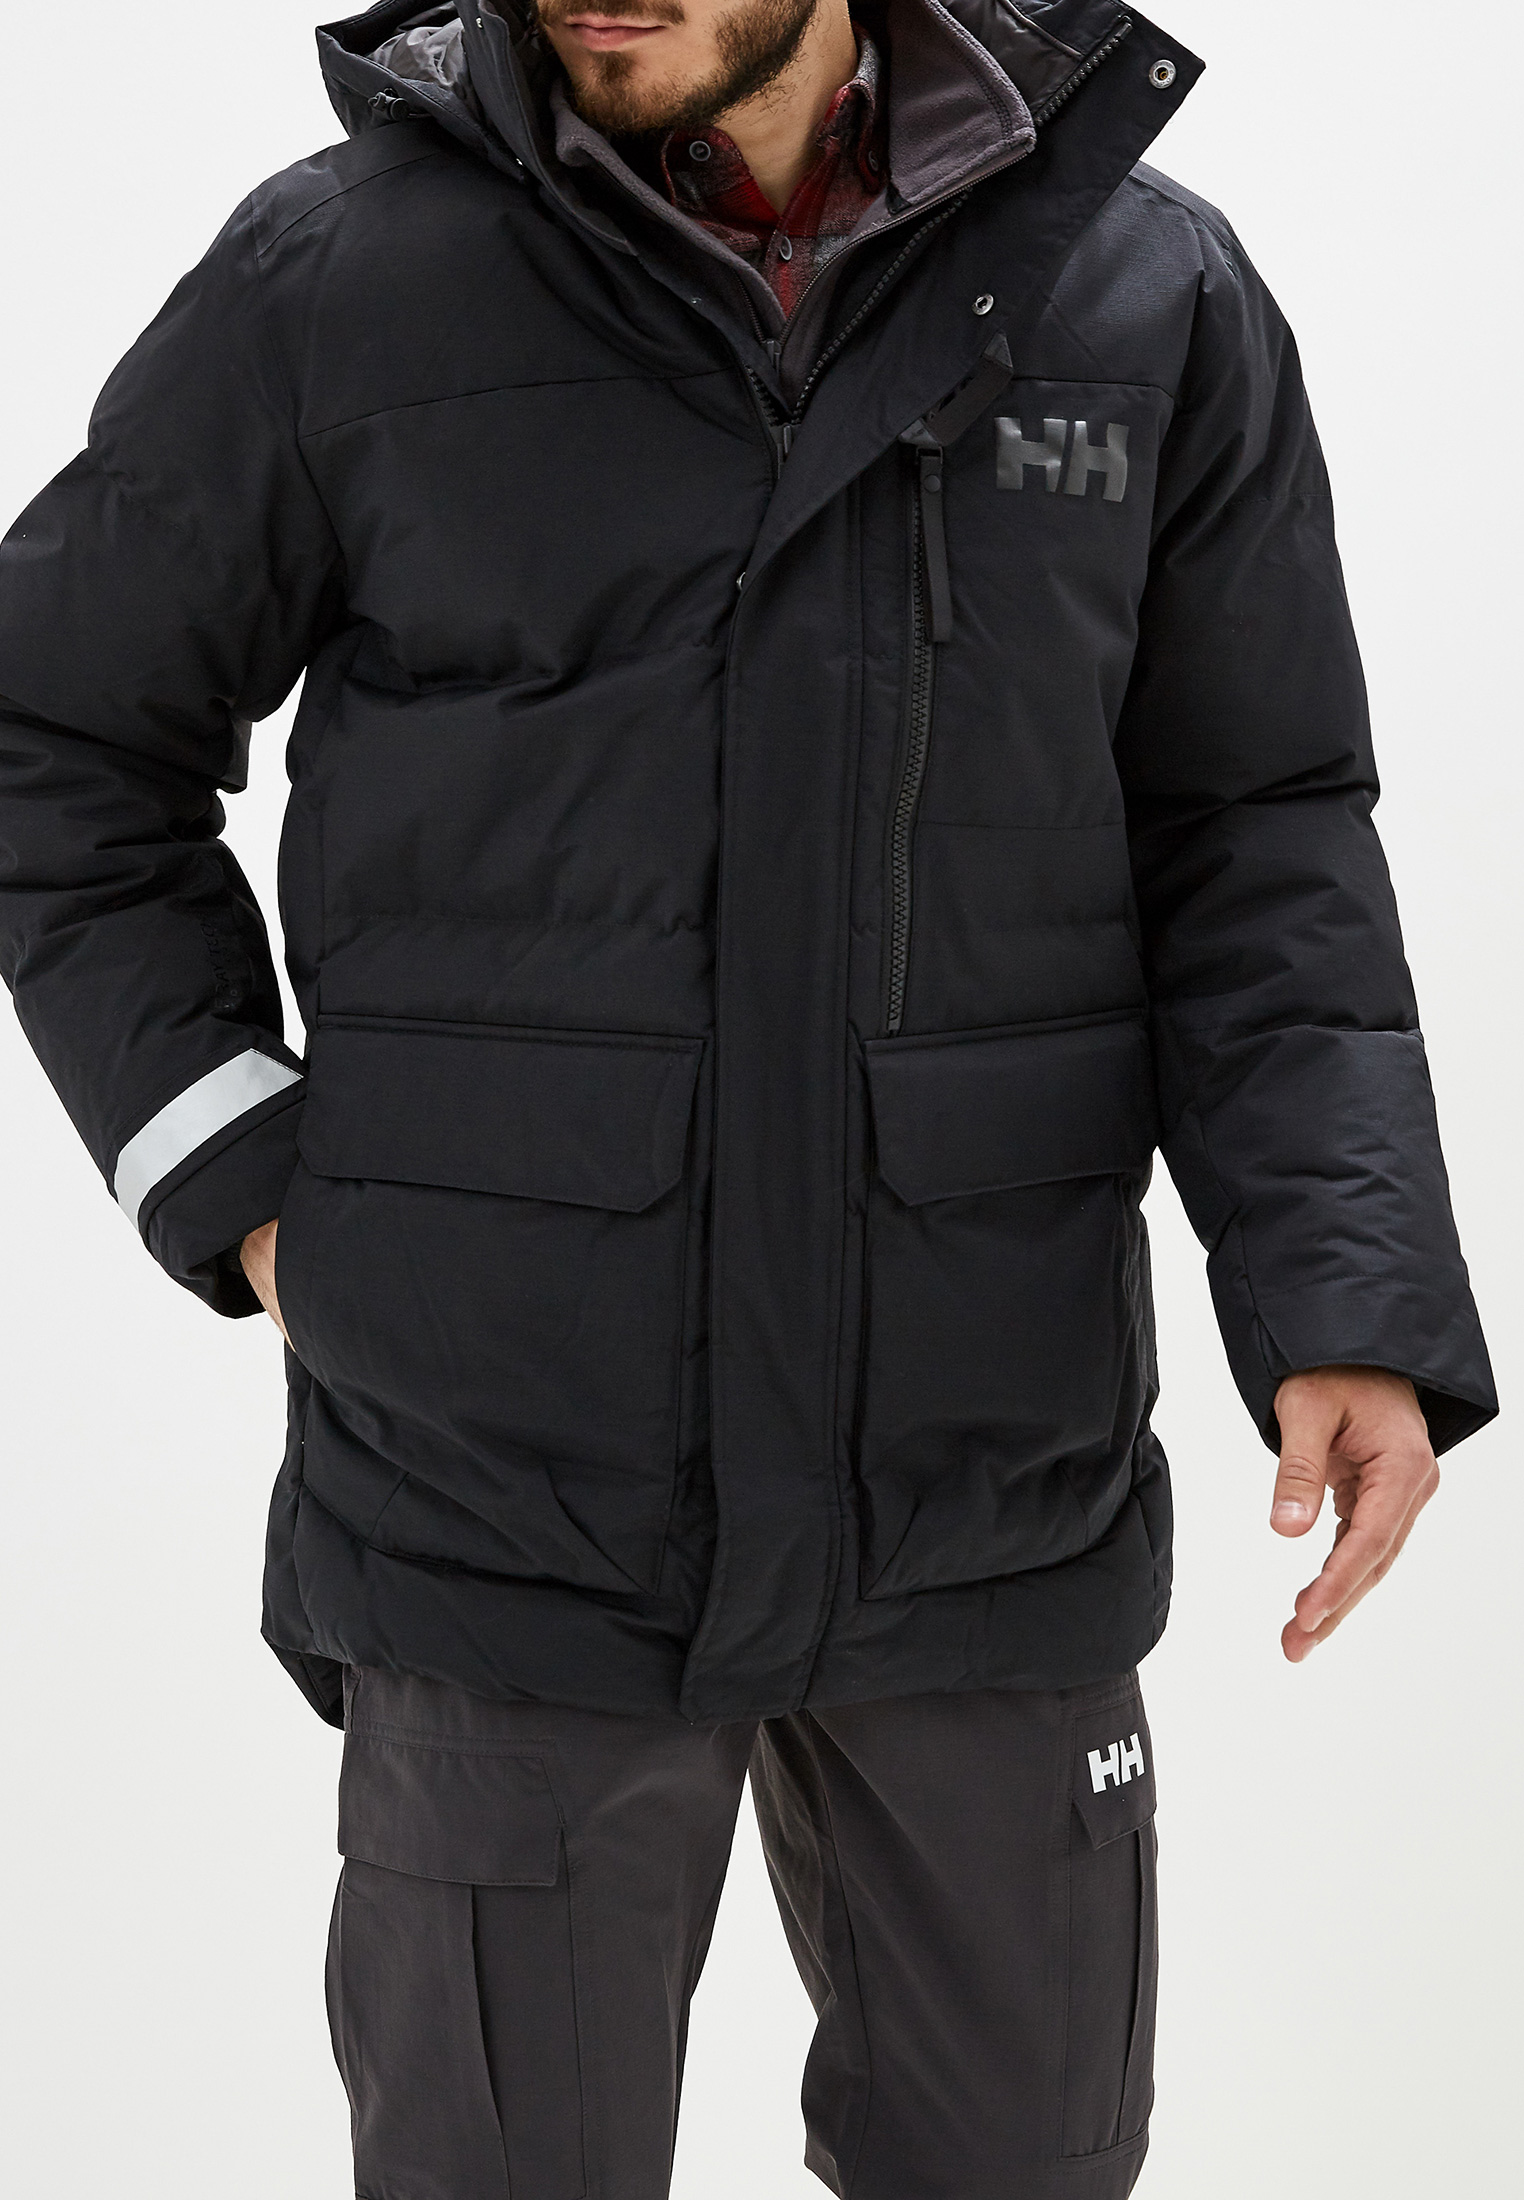 Утепленная куртка мужская Helly Hansen (Хэлли Хэнсон) 53074 цвет черный  купить за 14990 руб.